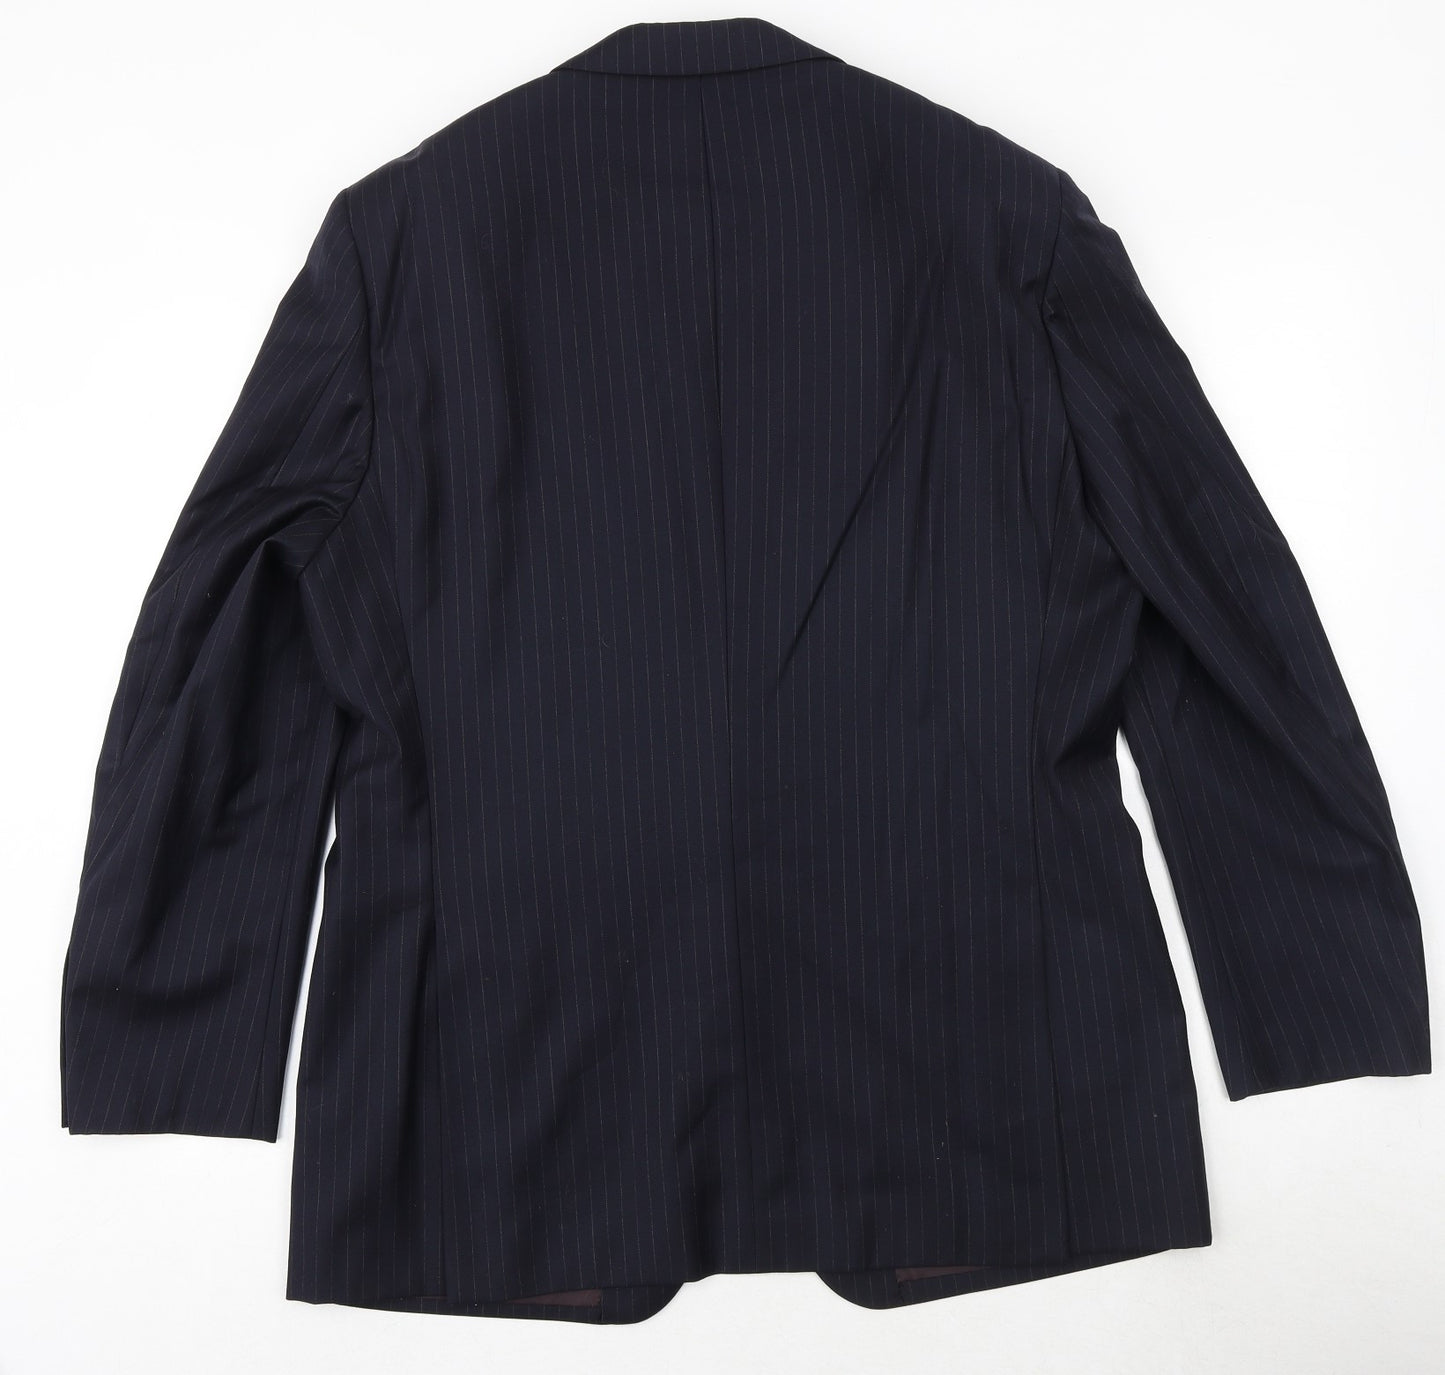 GREENWOODS Mens Blue Striped Wool Jacket Suit Jacket Size 42 Regular